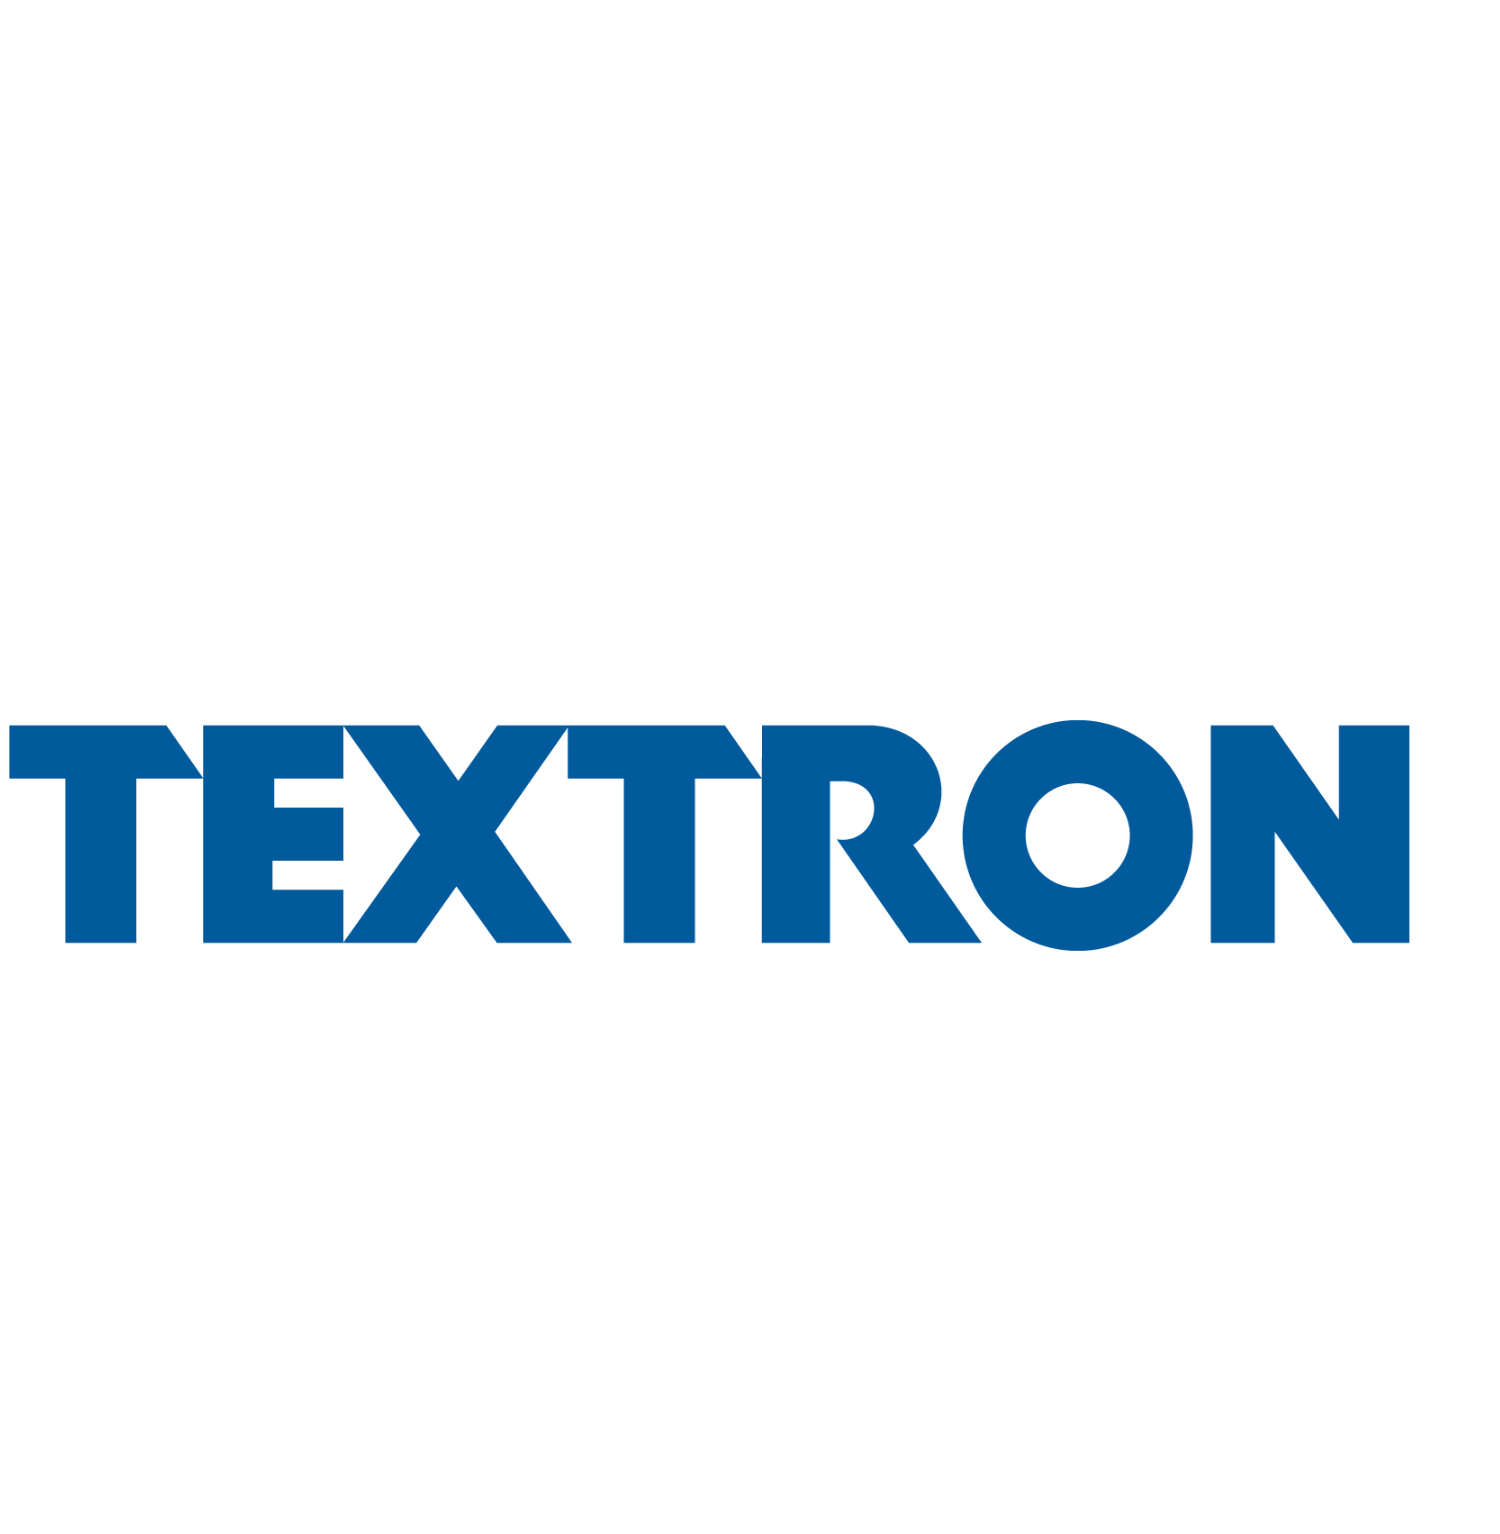 ENTERPRISE - Textron-1